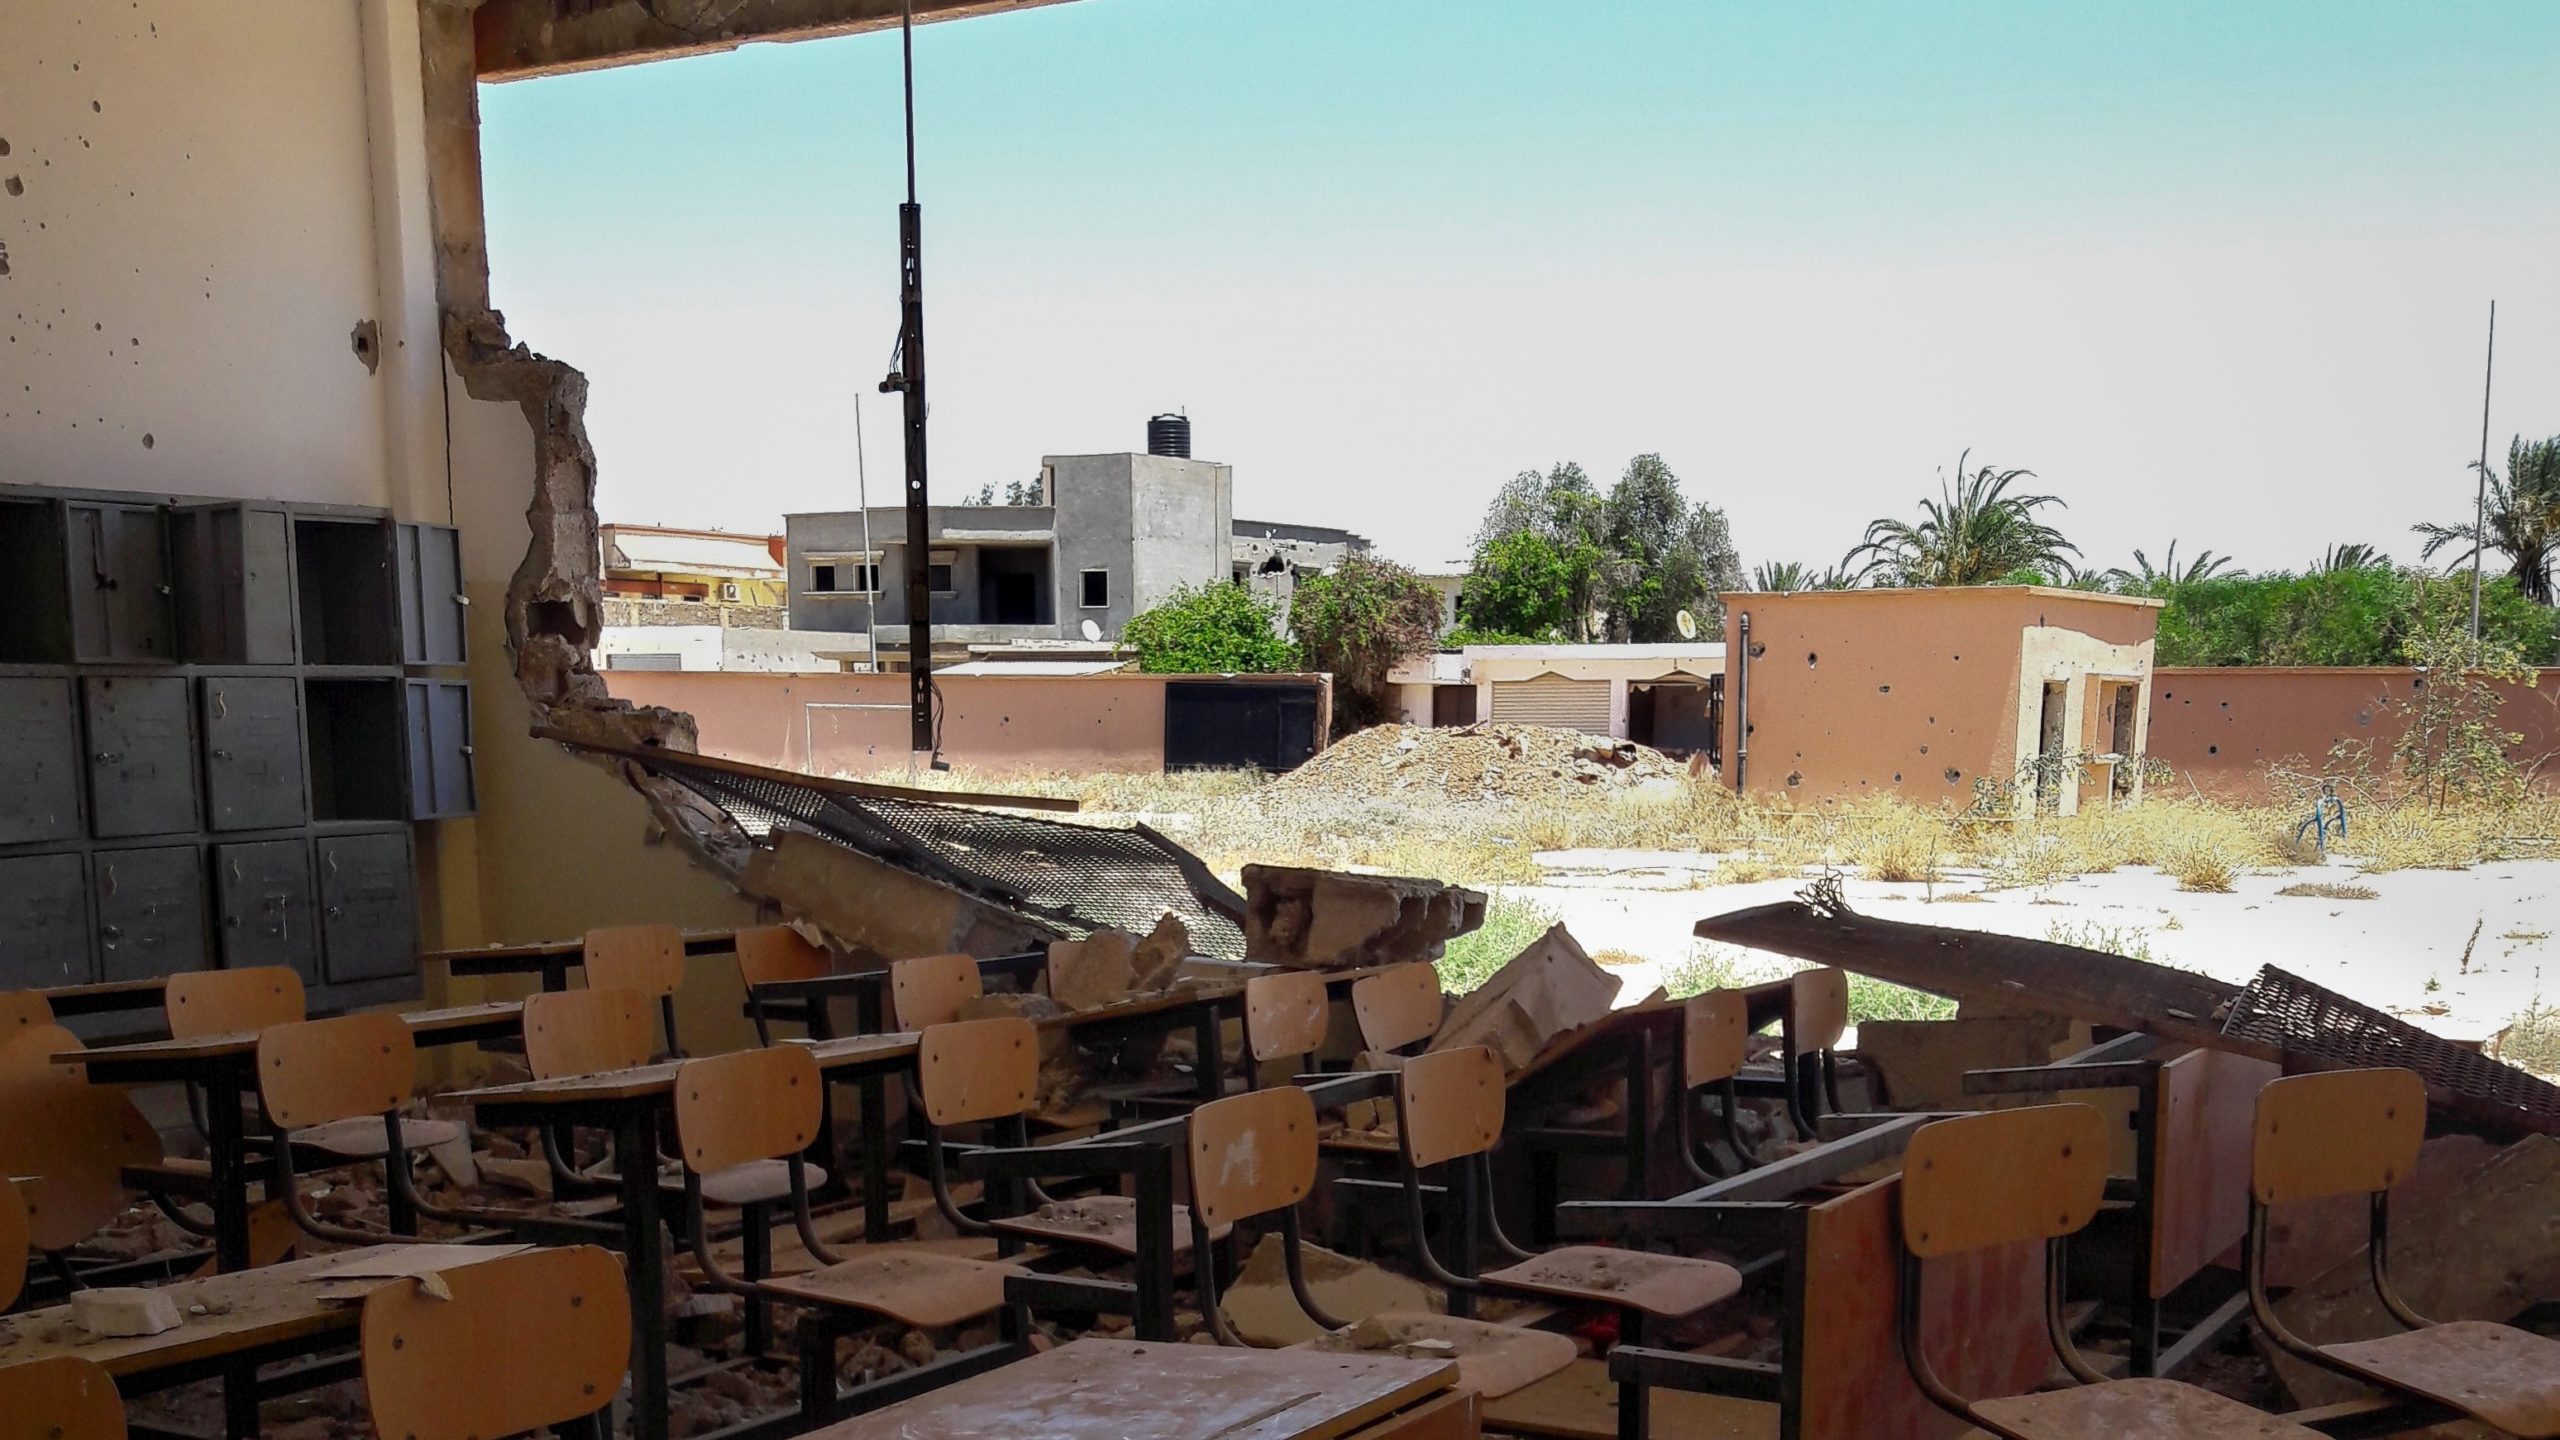 Destroyed school classroom in the Guwarsha neighbourhood of Benghazi, Eastern Libya. Credits: ACTED/Nada Elfeituri, June 2017